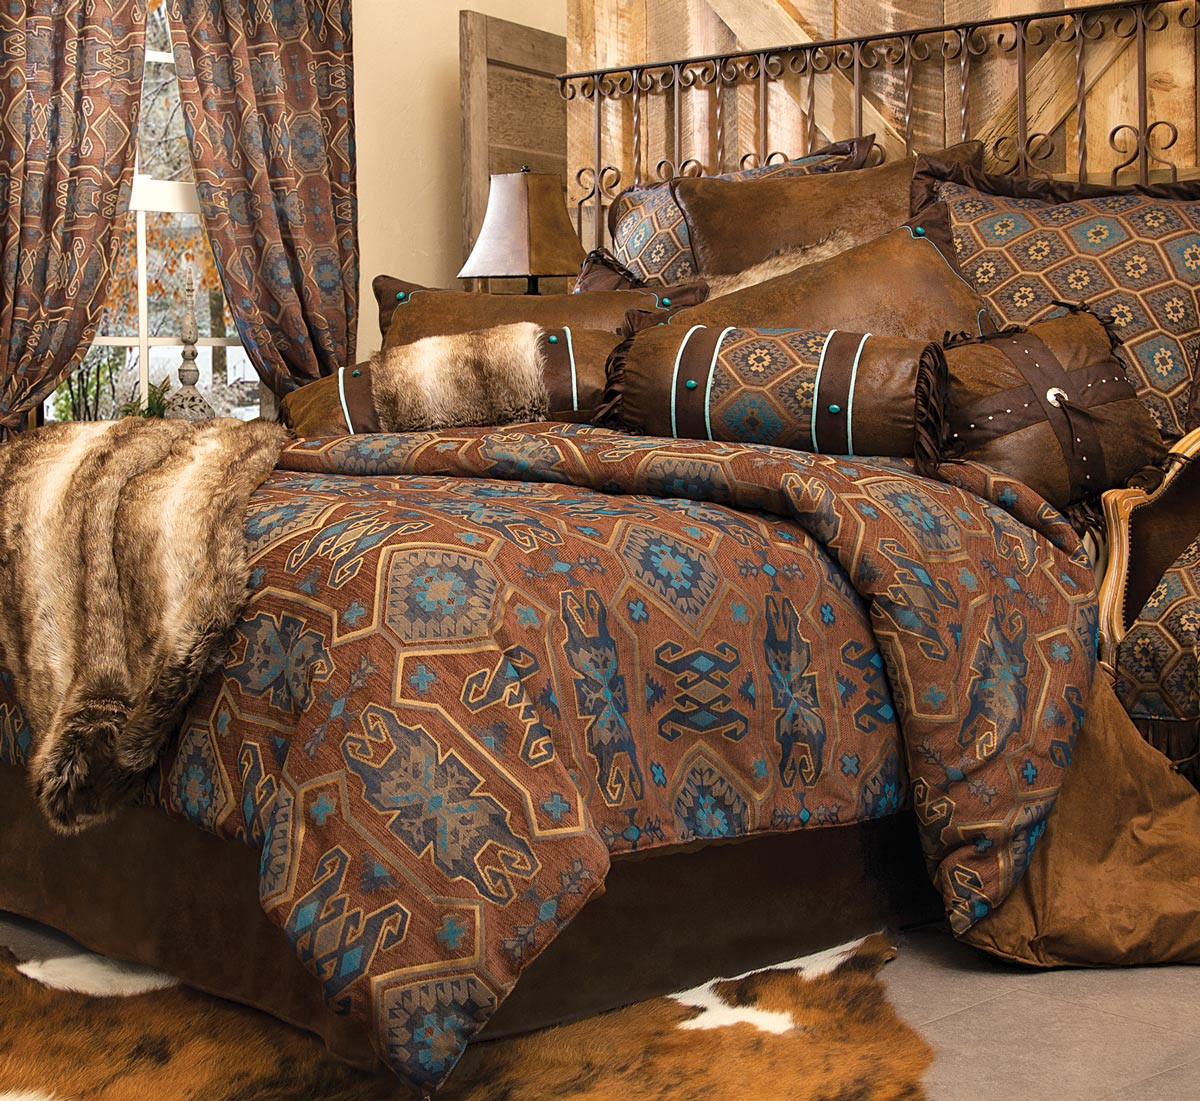 Rustic Bedroom Set King
 Rustic Bedding King Size Turquoise Mesa Bed Set Black